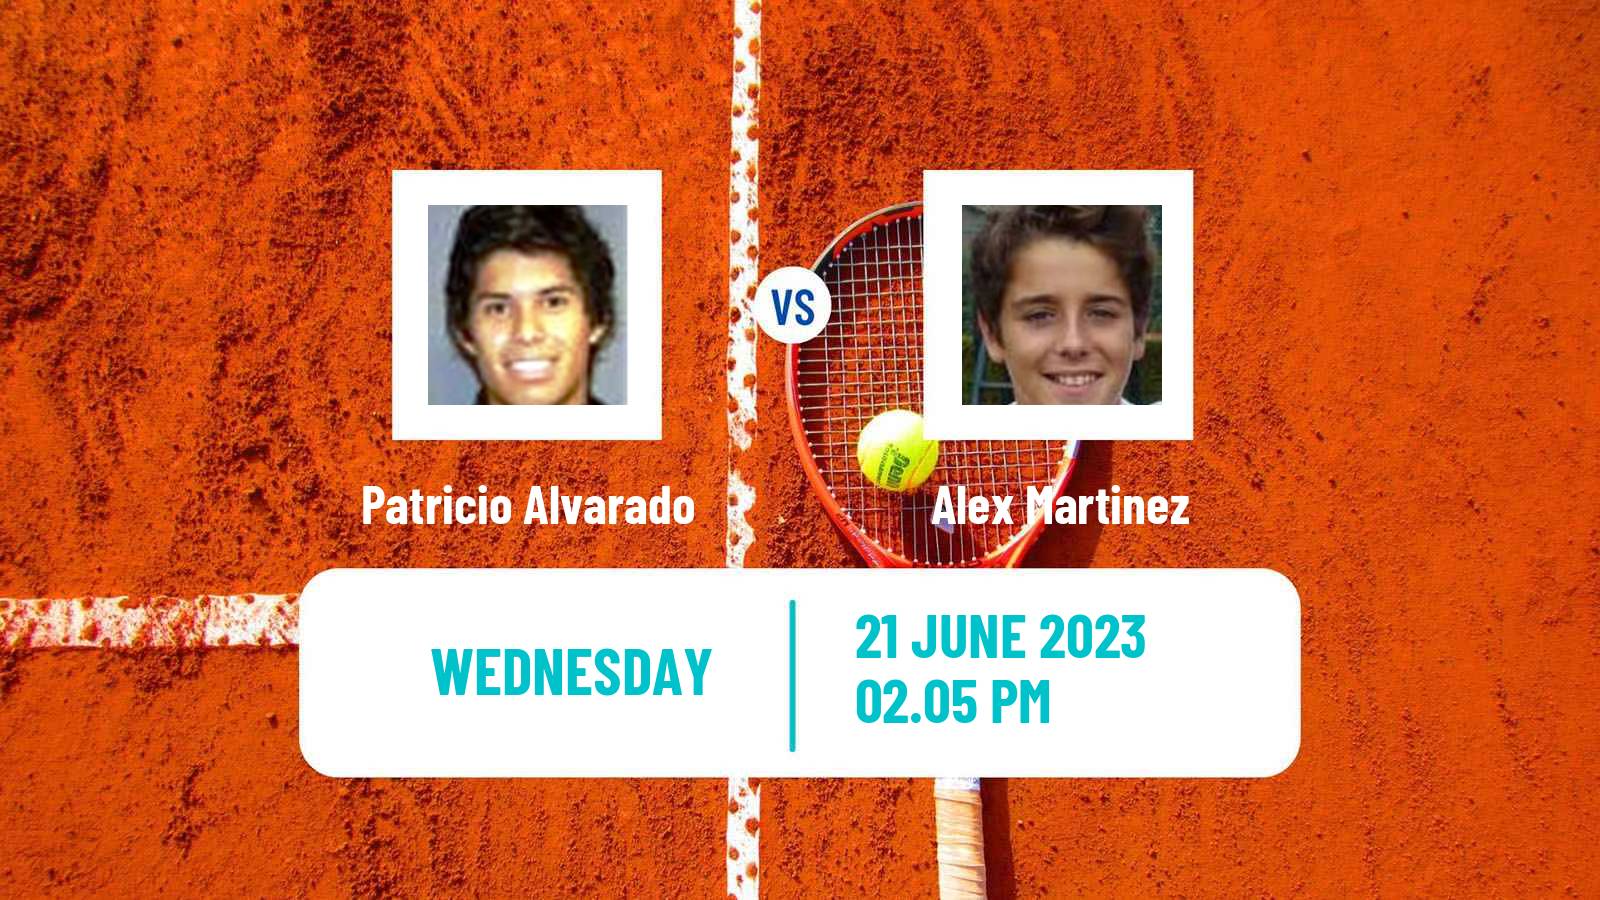 Tennis ITF M25 Mungia Men Patricio Alvarado - Alex Martinez